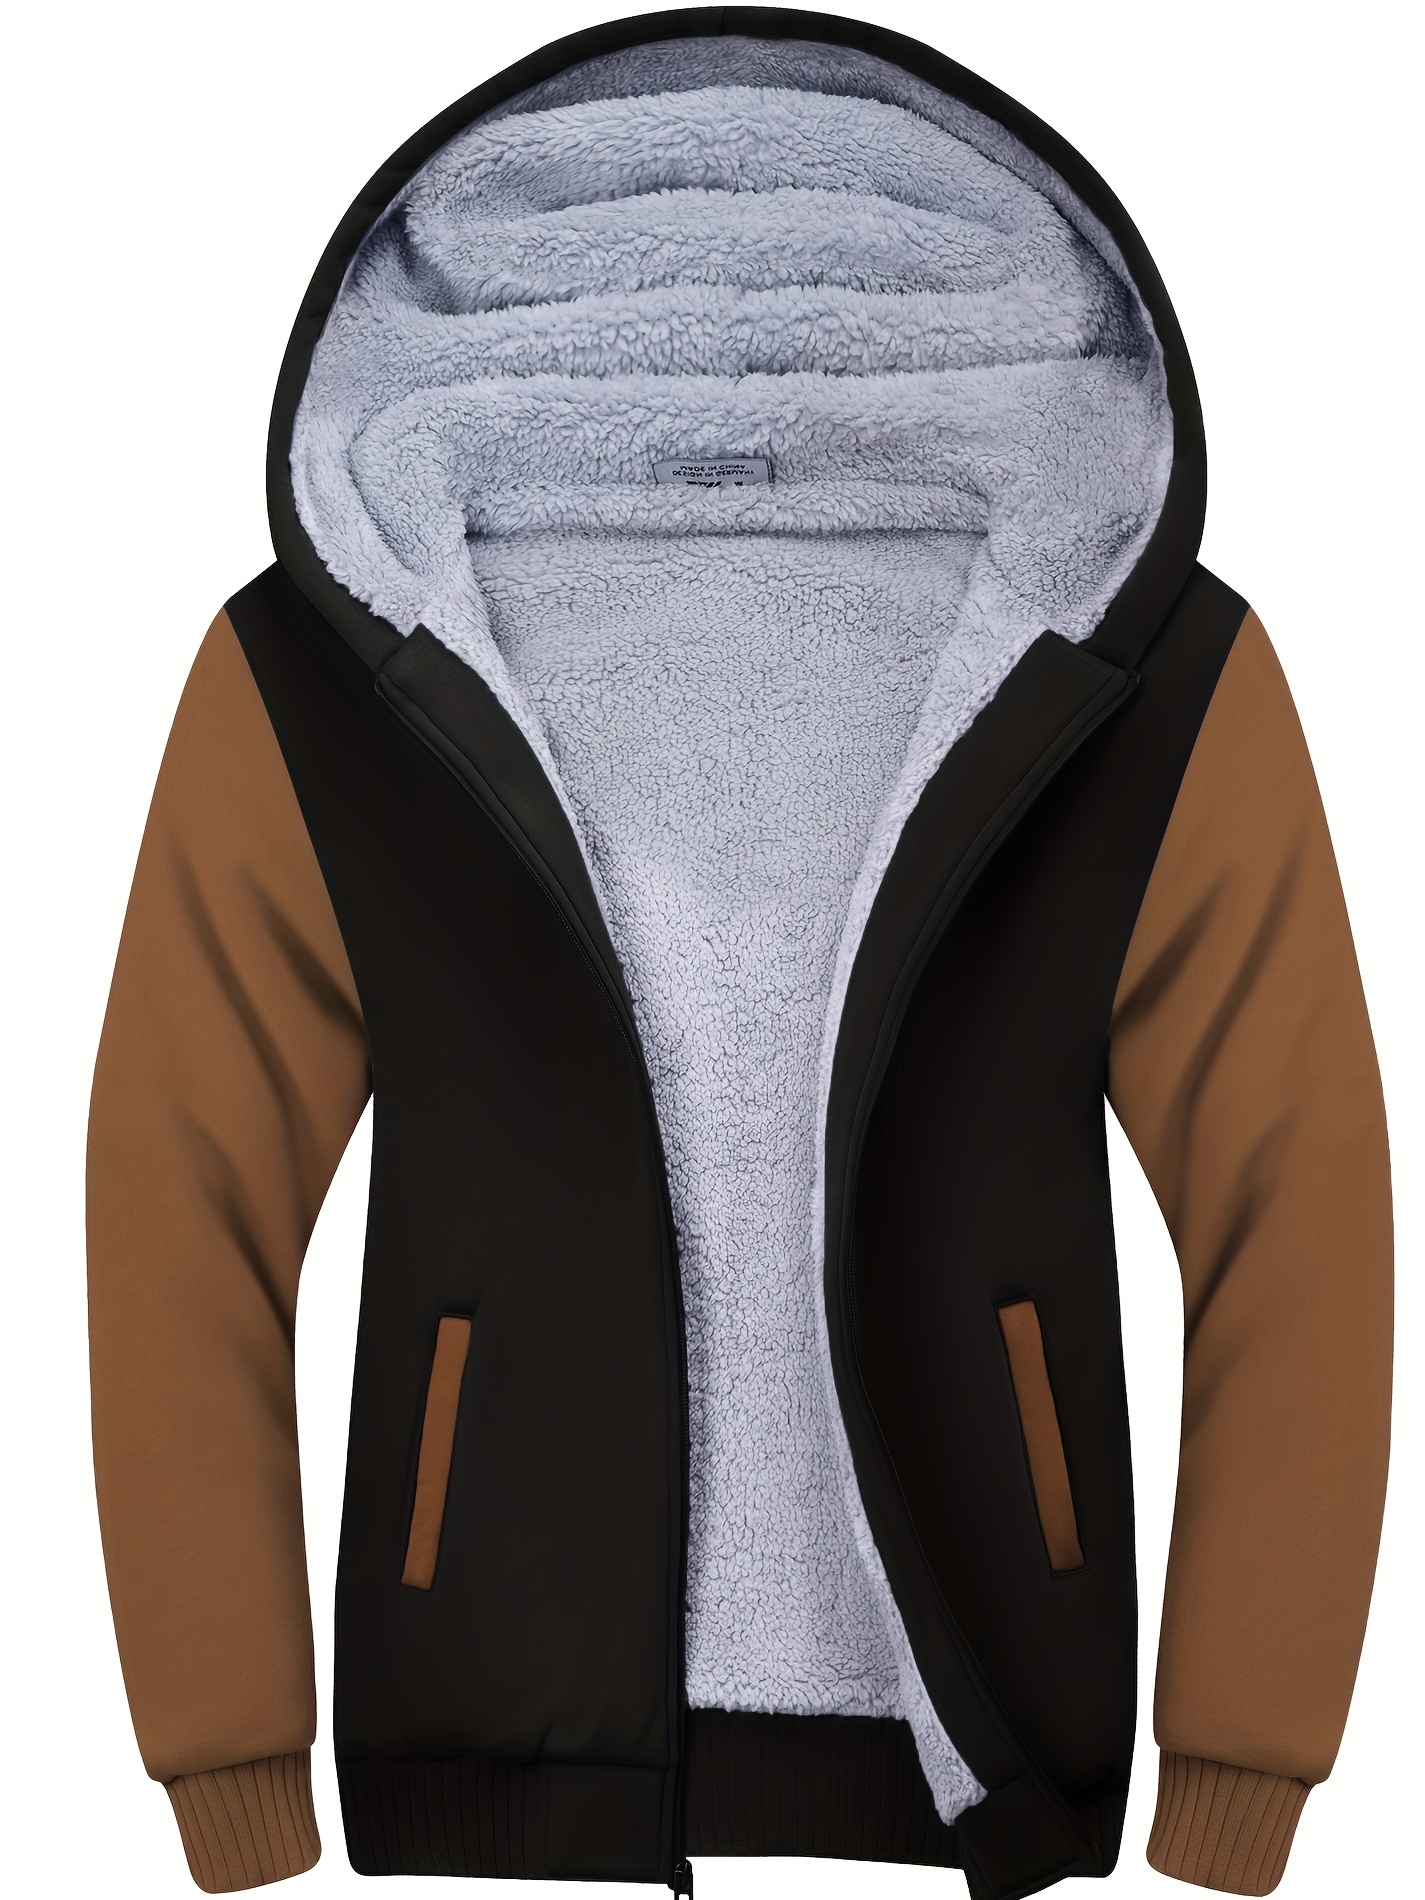 Sweatsuit for Women 2 Piece Warm Thick Fur Lining Fleece Zip Up